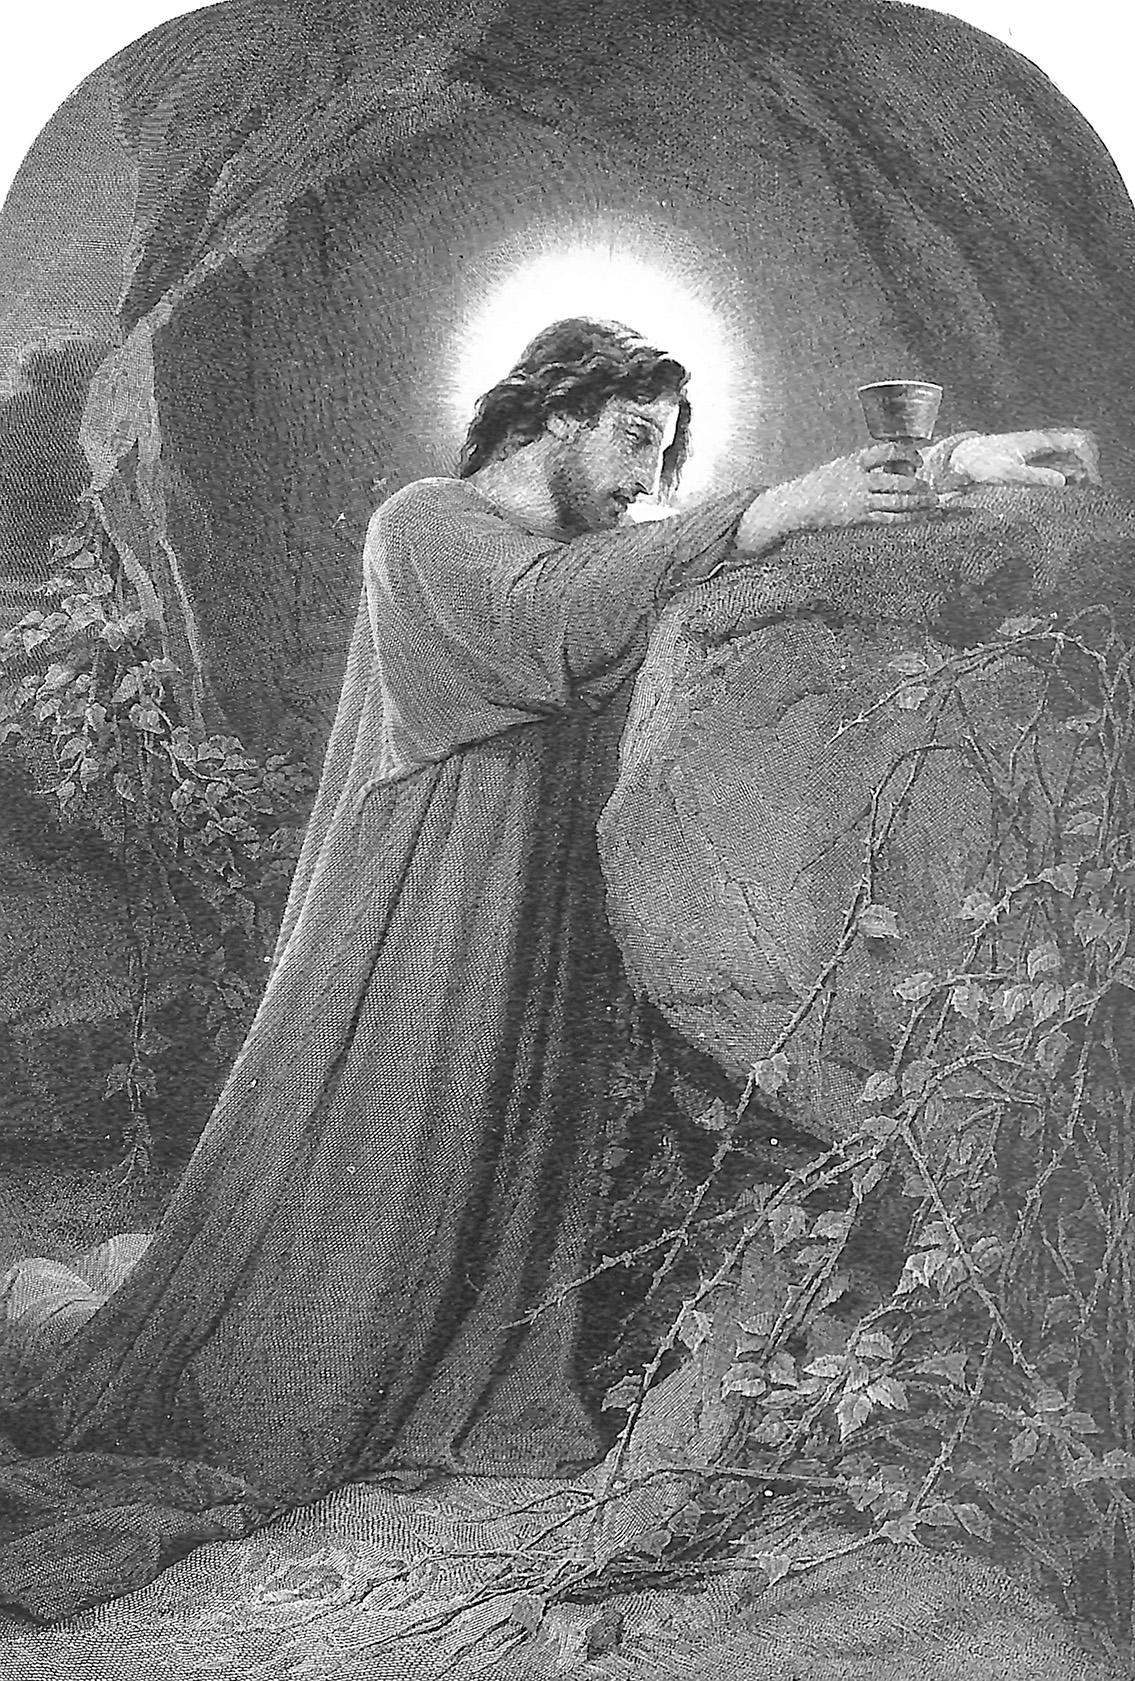 In The Garden of Gethsemane